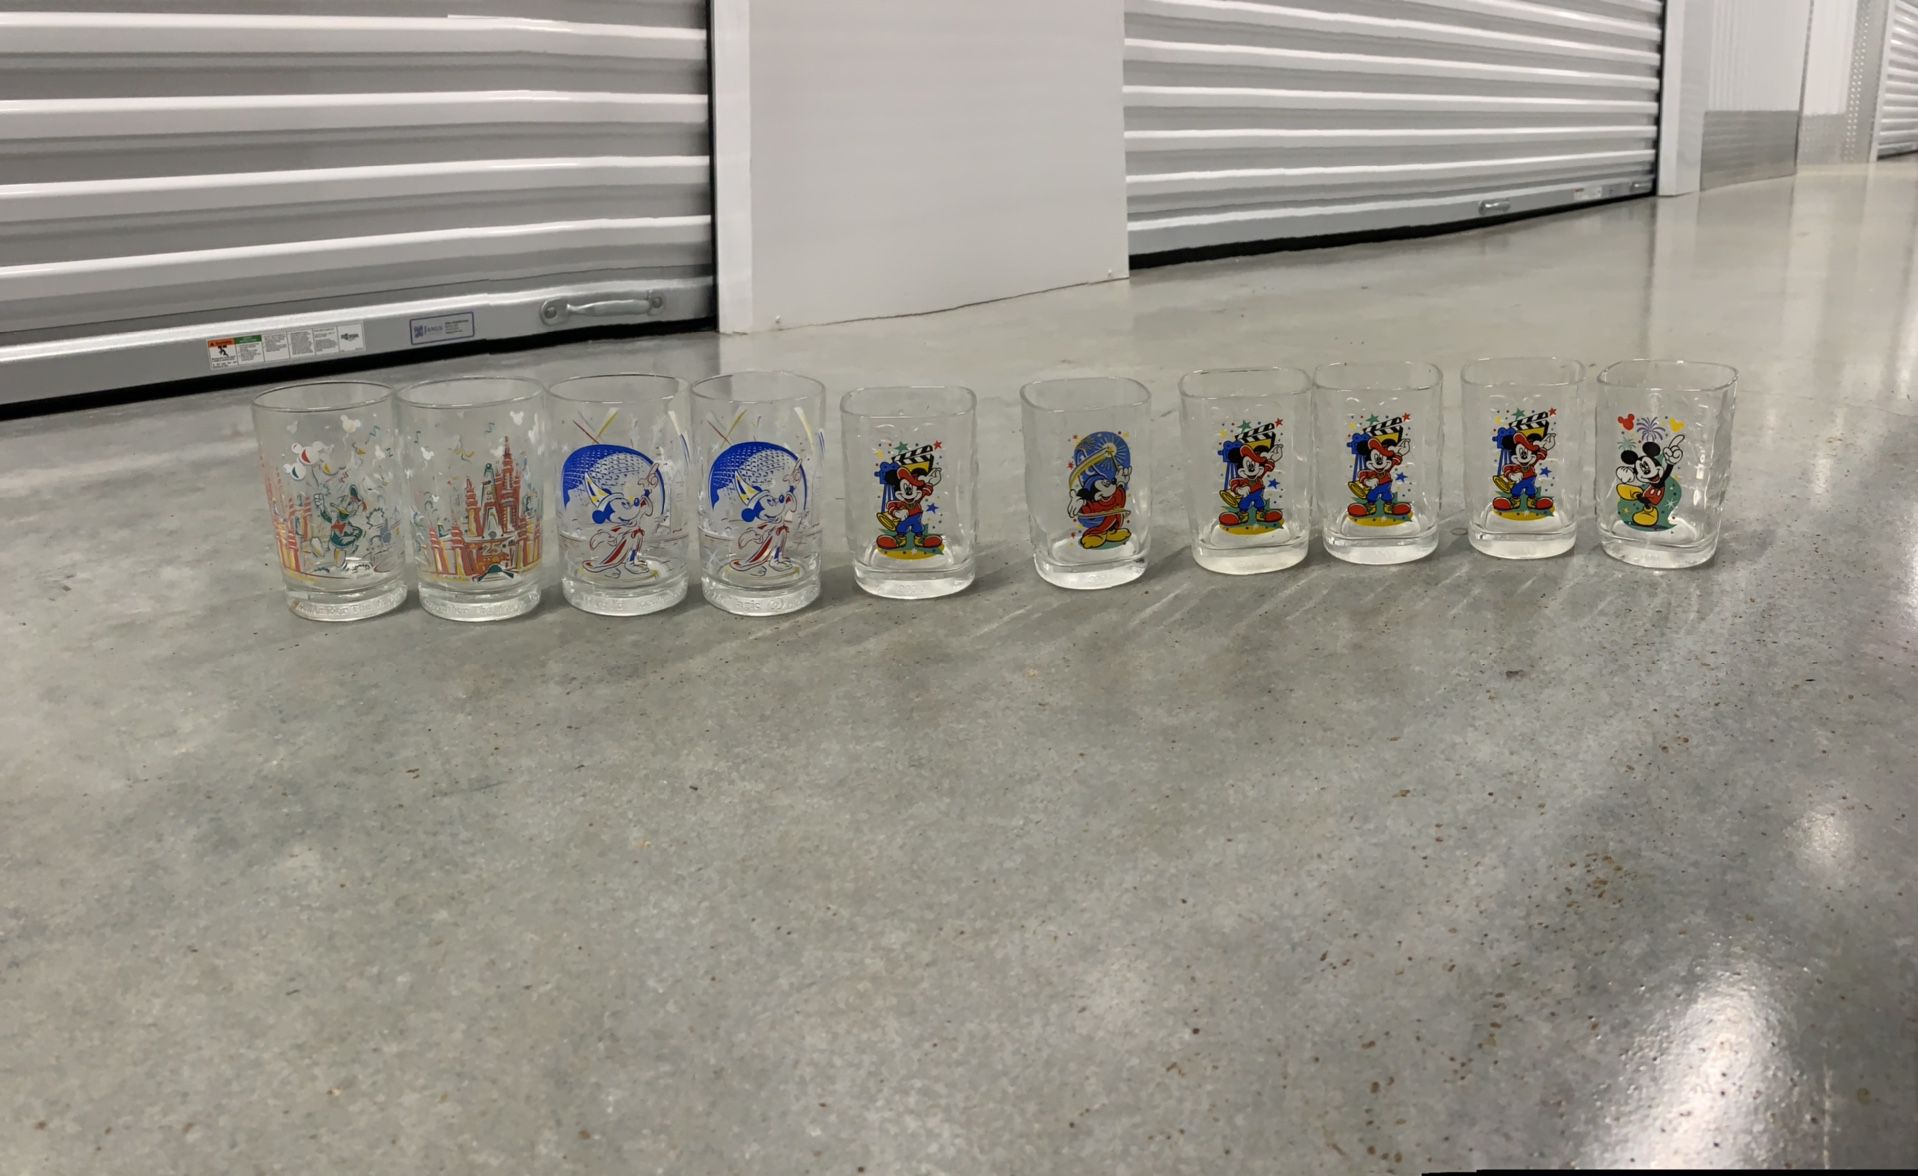 Disney commemorative glasses